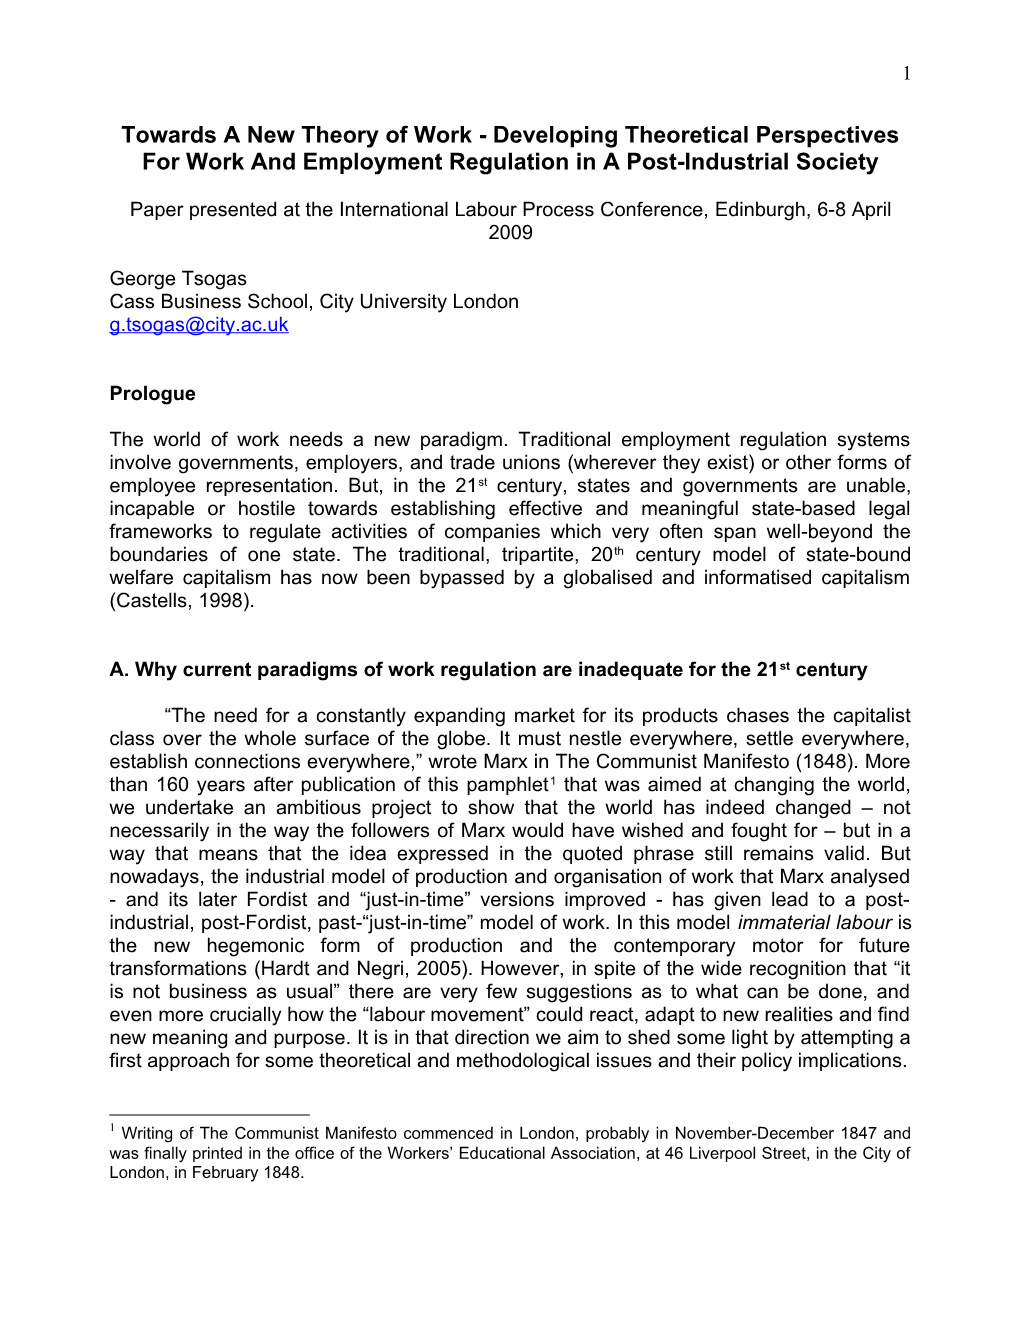 Towards a Csr-Inspired Model of International Labour Regulation